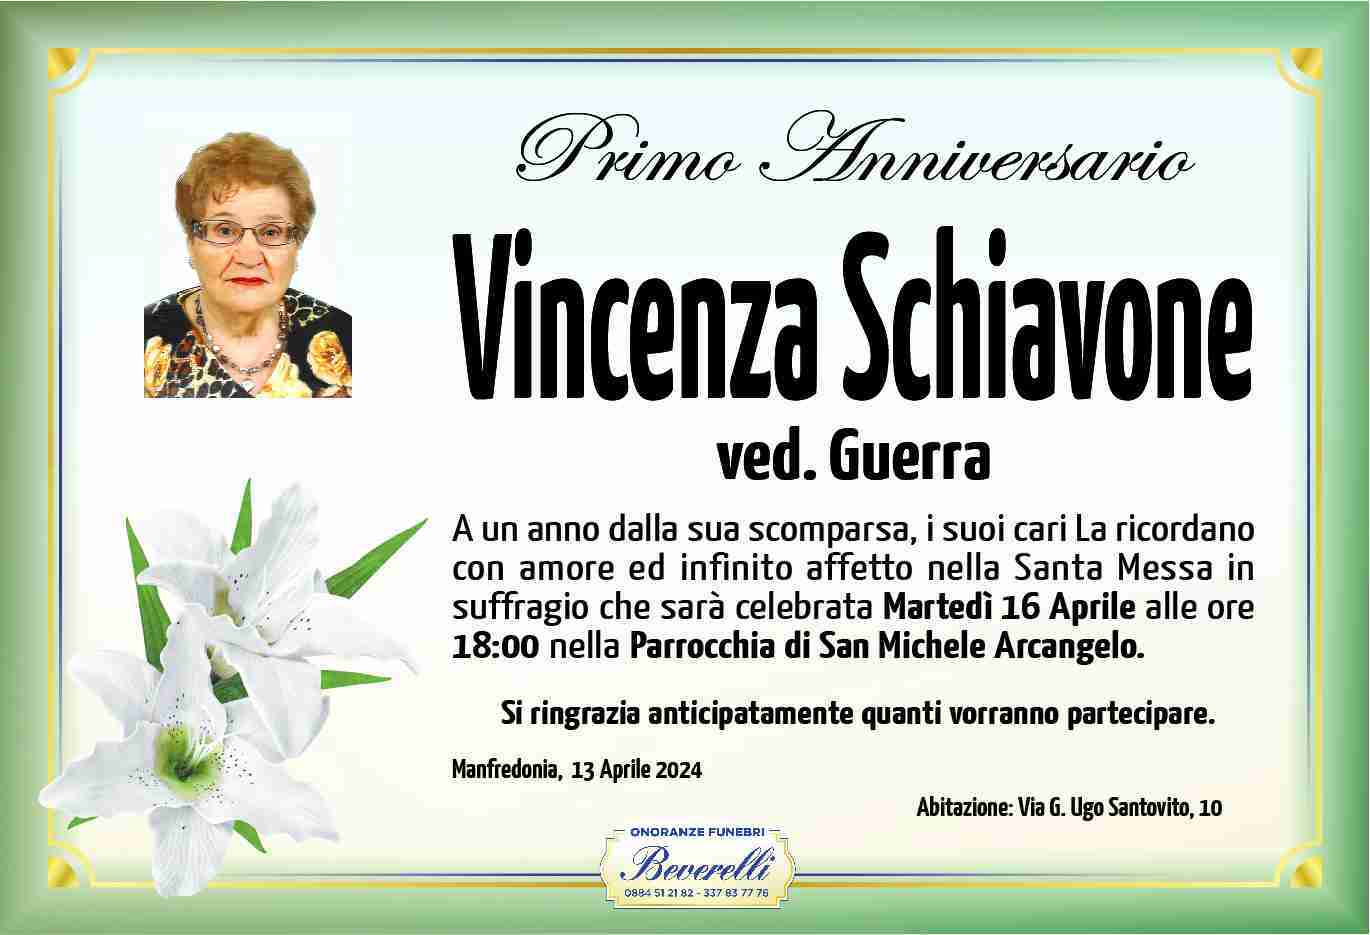 Vincenza Schiavone